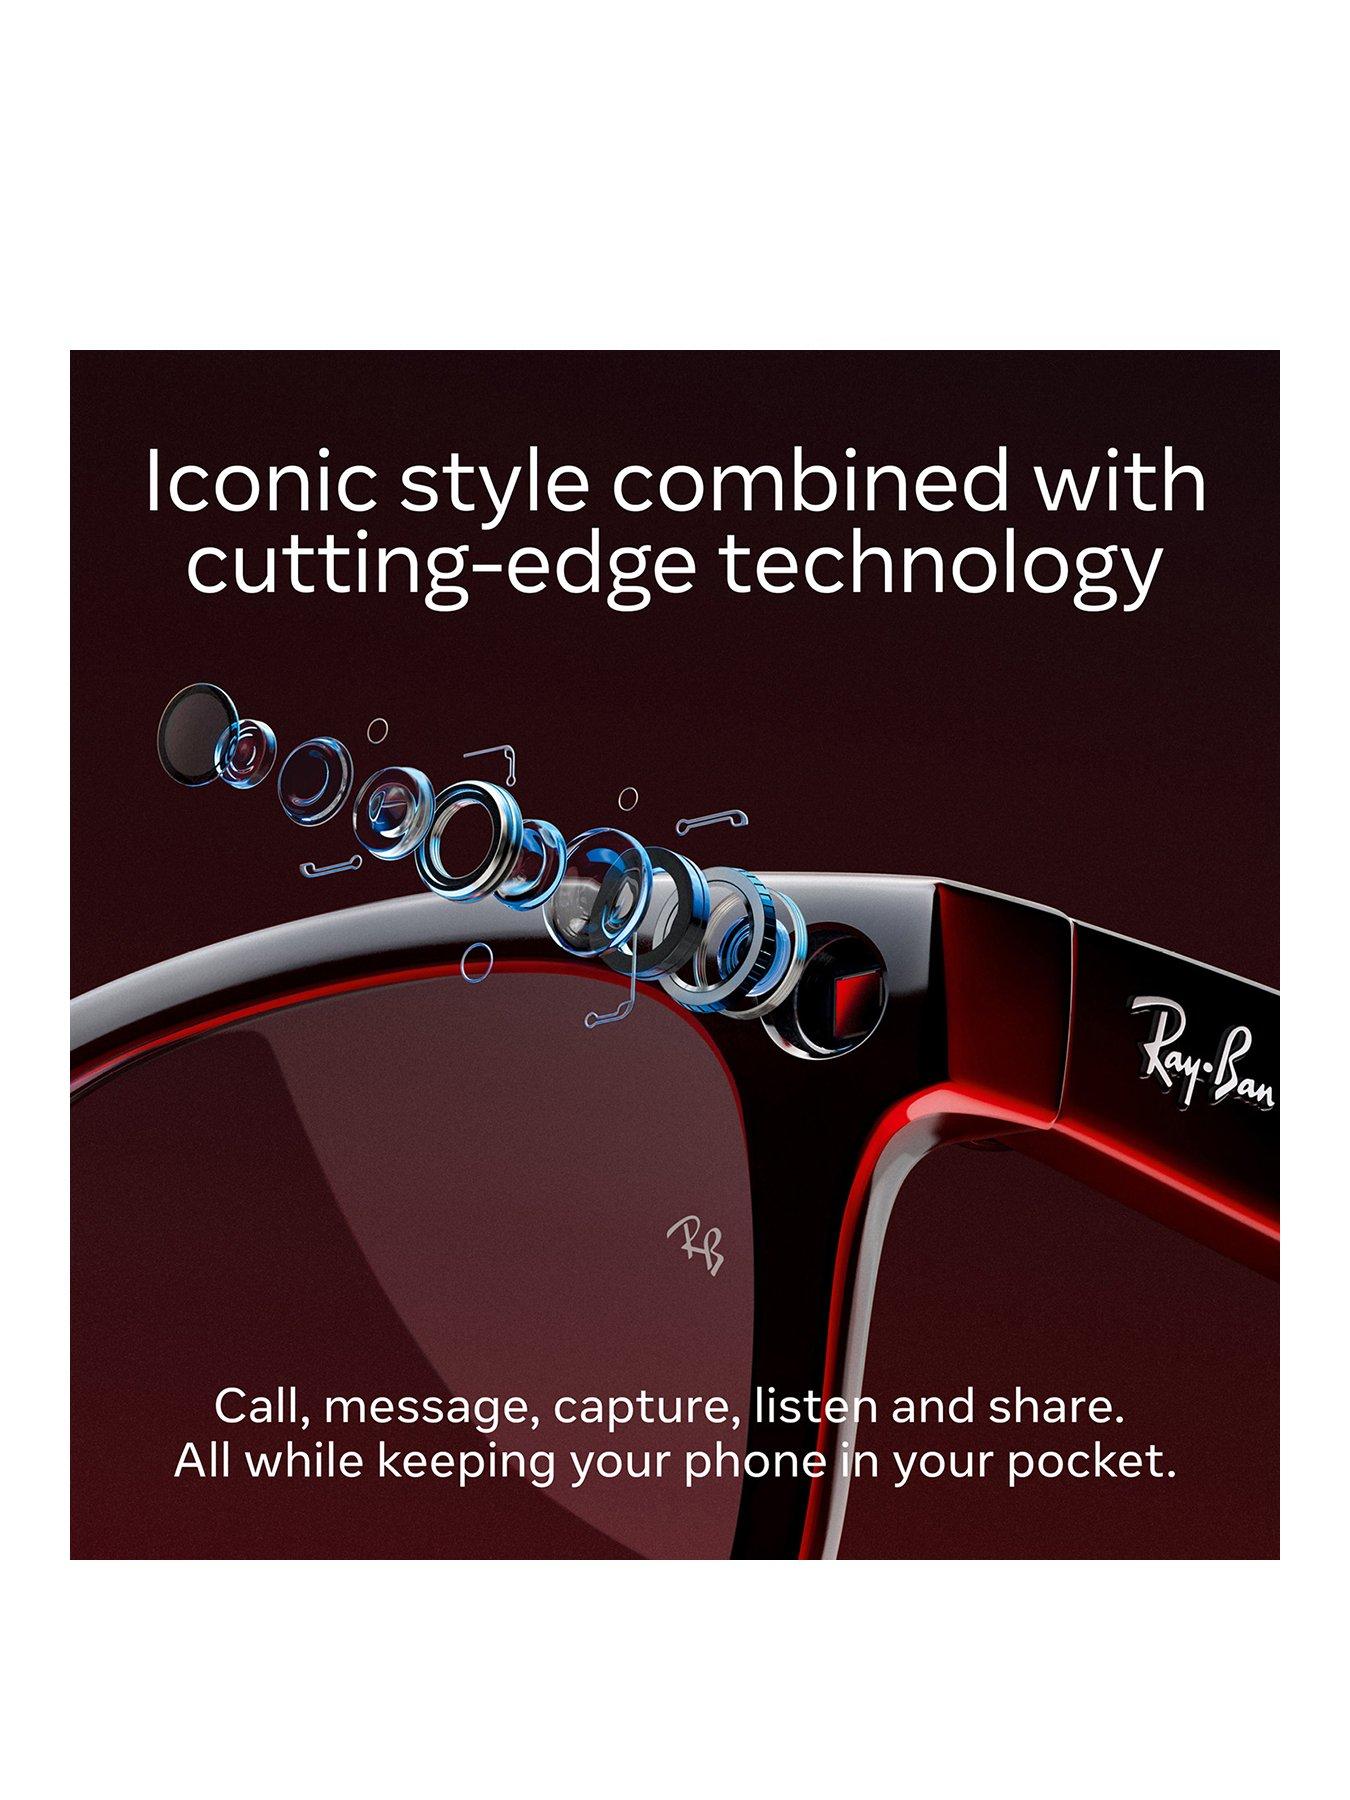 Ray-Ban Meta - Wayfarer (Standard) Smart Glasses - Matte Black, Polarized  Gradient Graphite : : Clothing, Shoes & Accessories